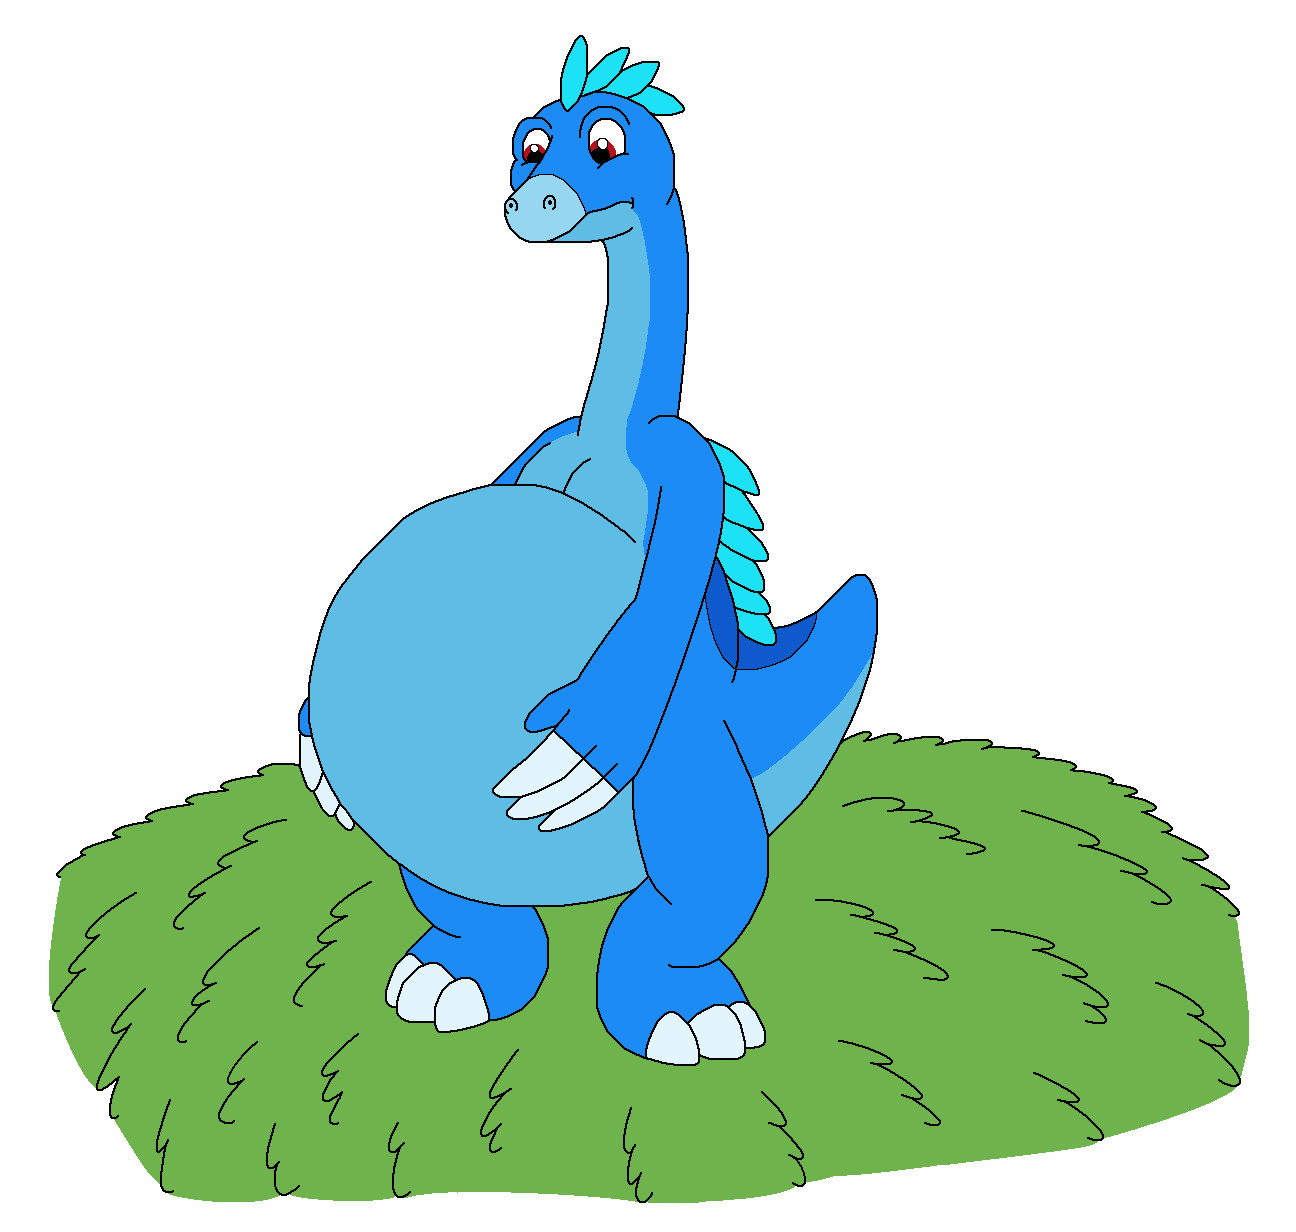 Theo's BIG blue belly by MCsaurus on DeviantArt